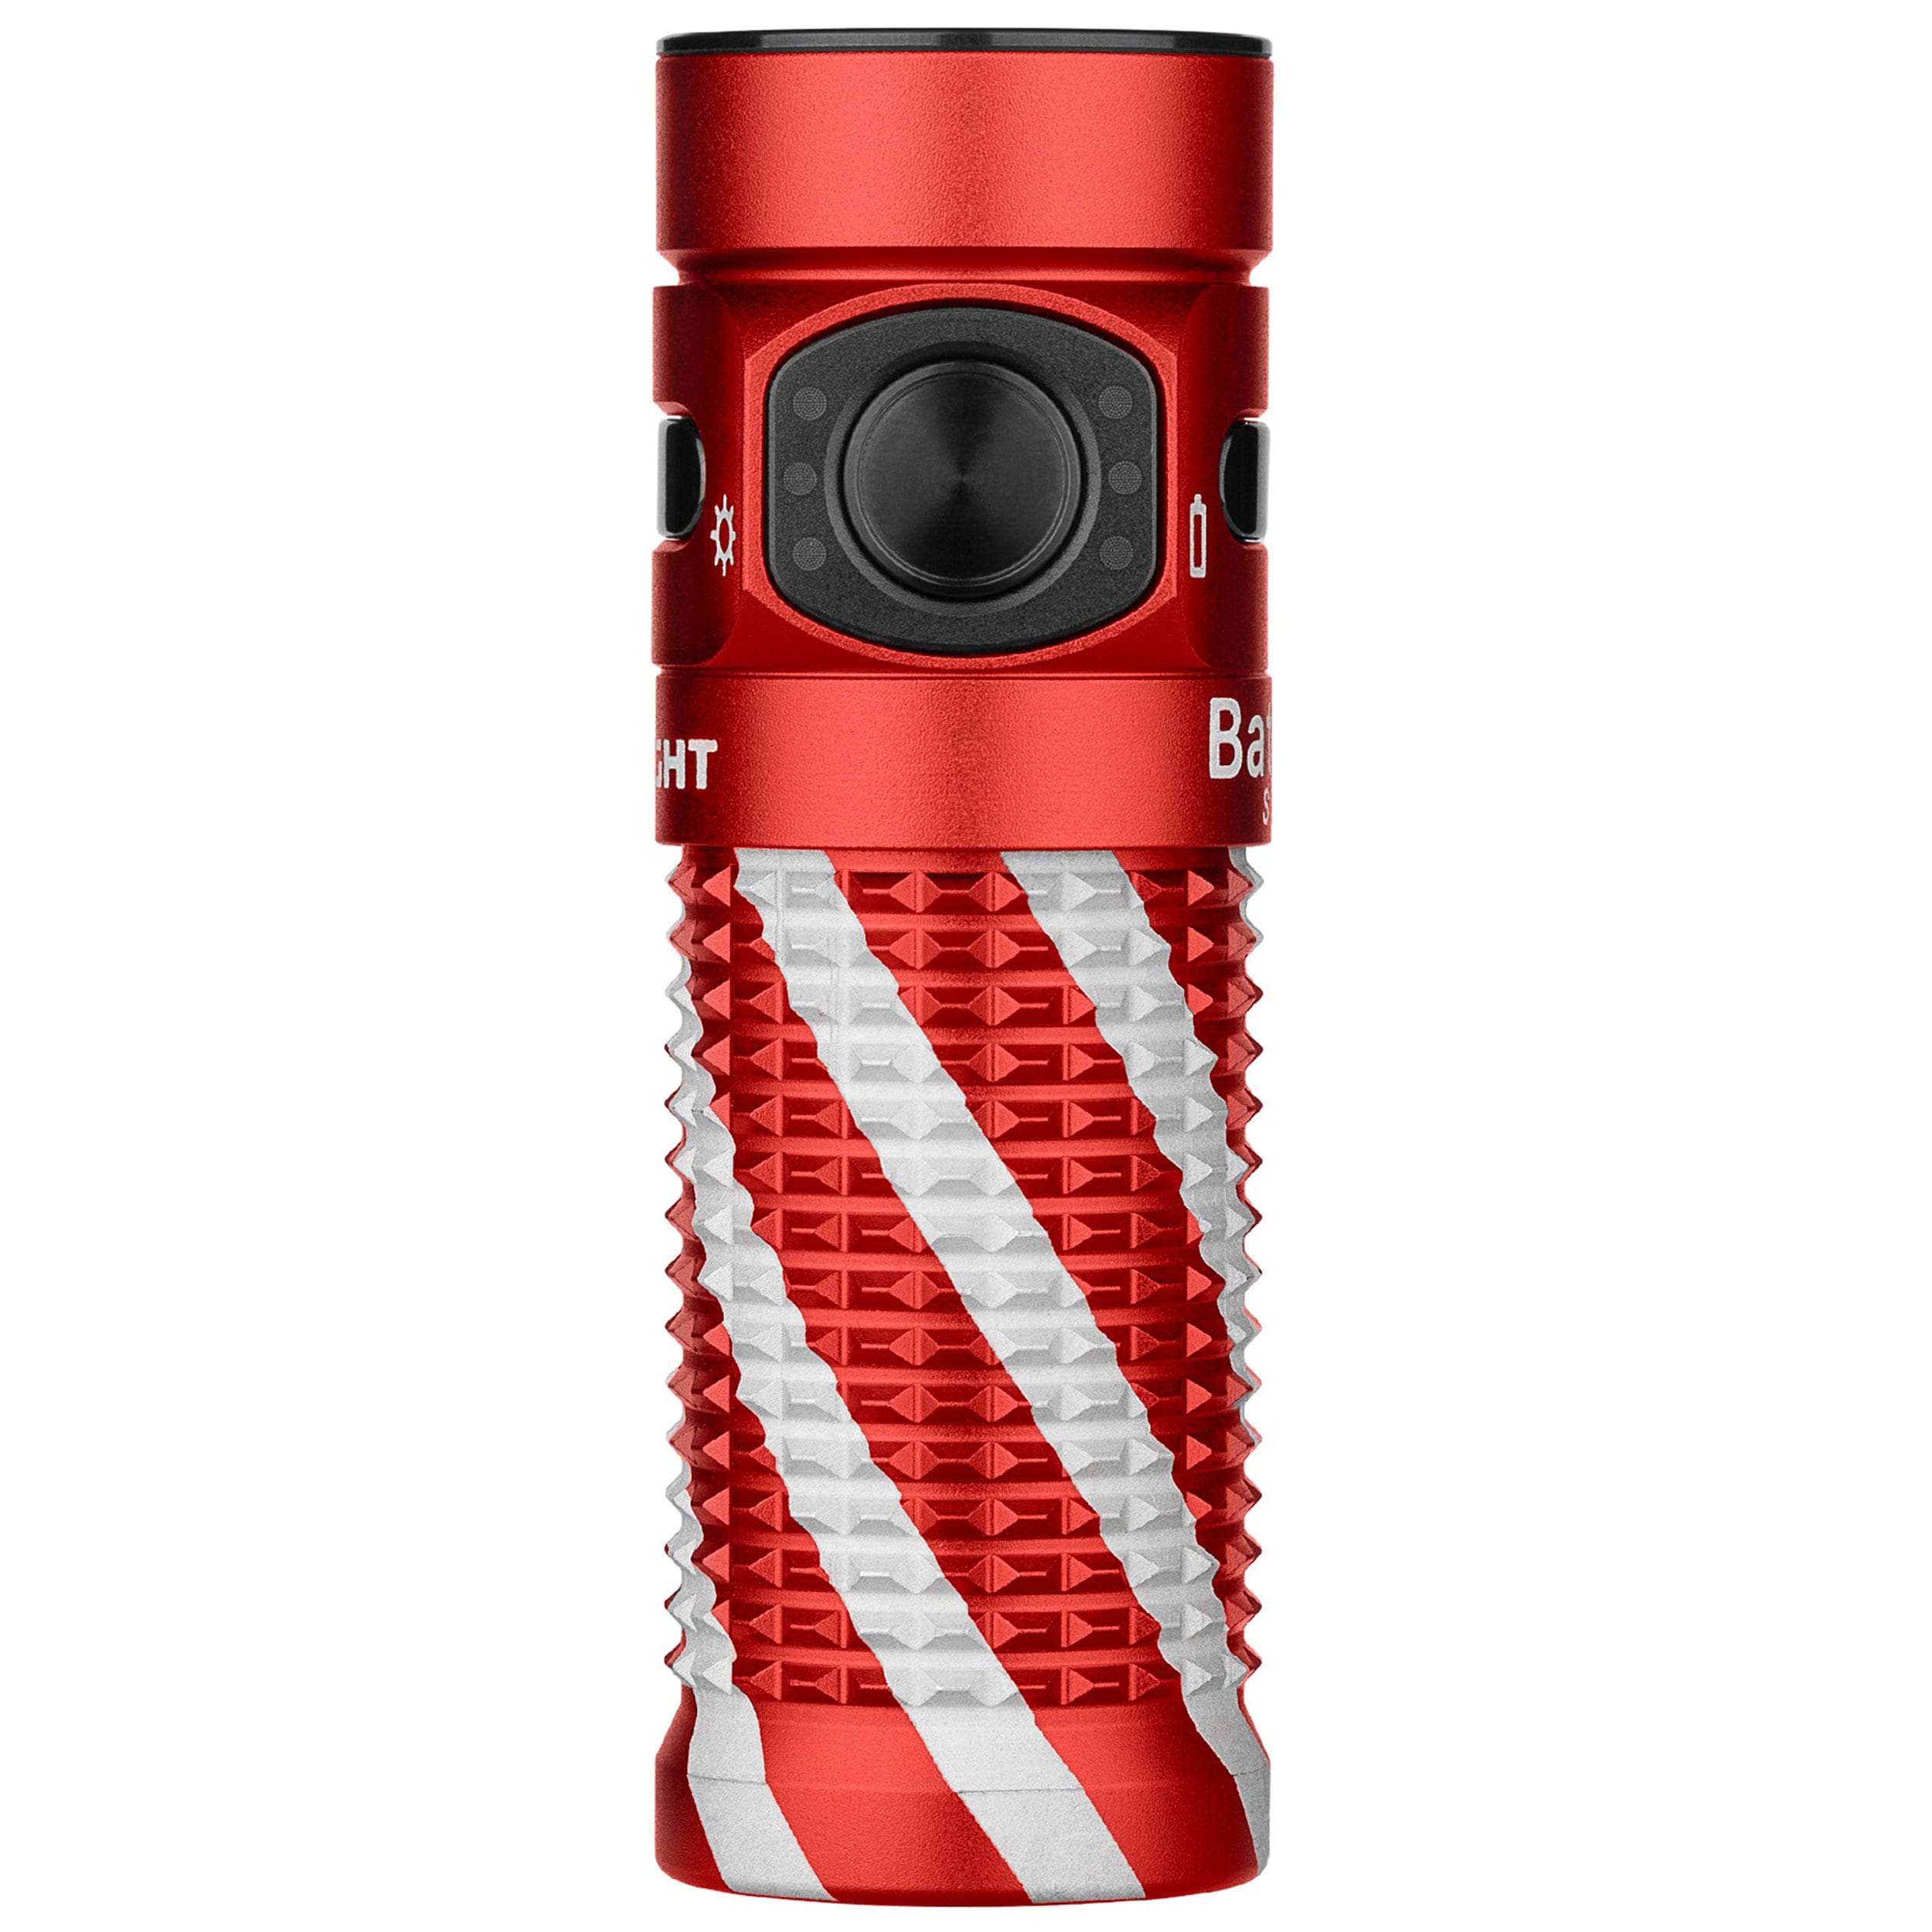 Акумуляторний ліхтарик Olight Baton 4 Limited Edition White Red - 1300 люменів